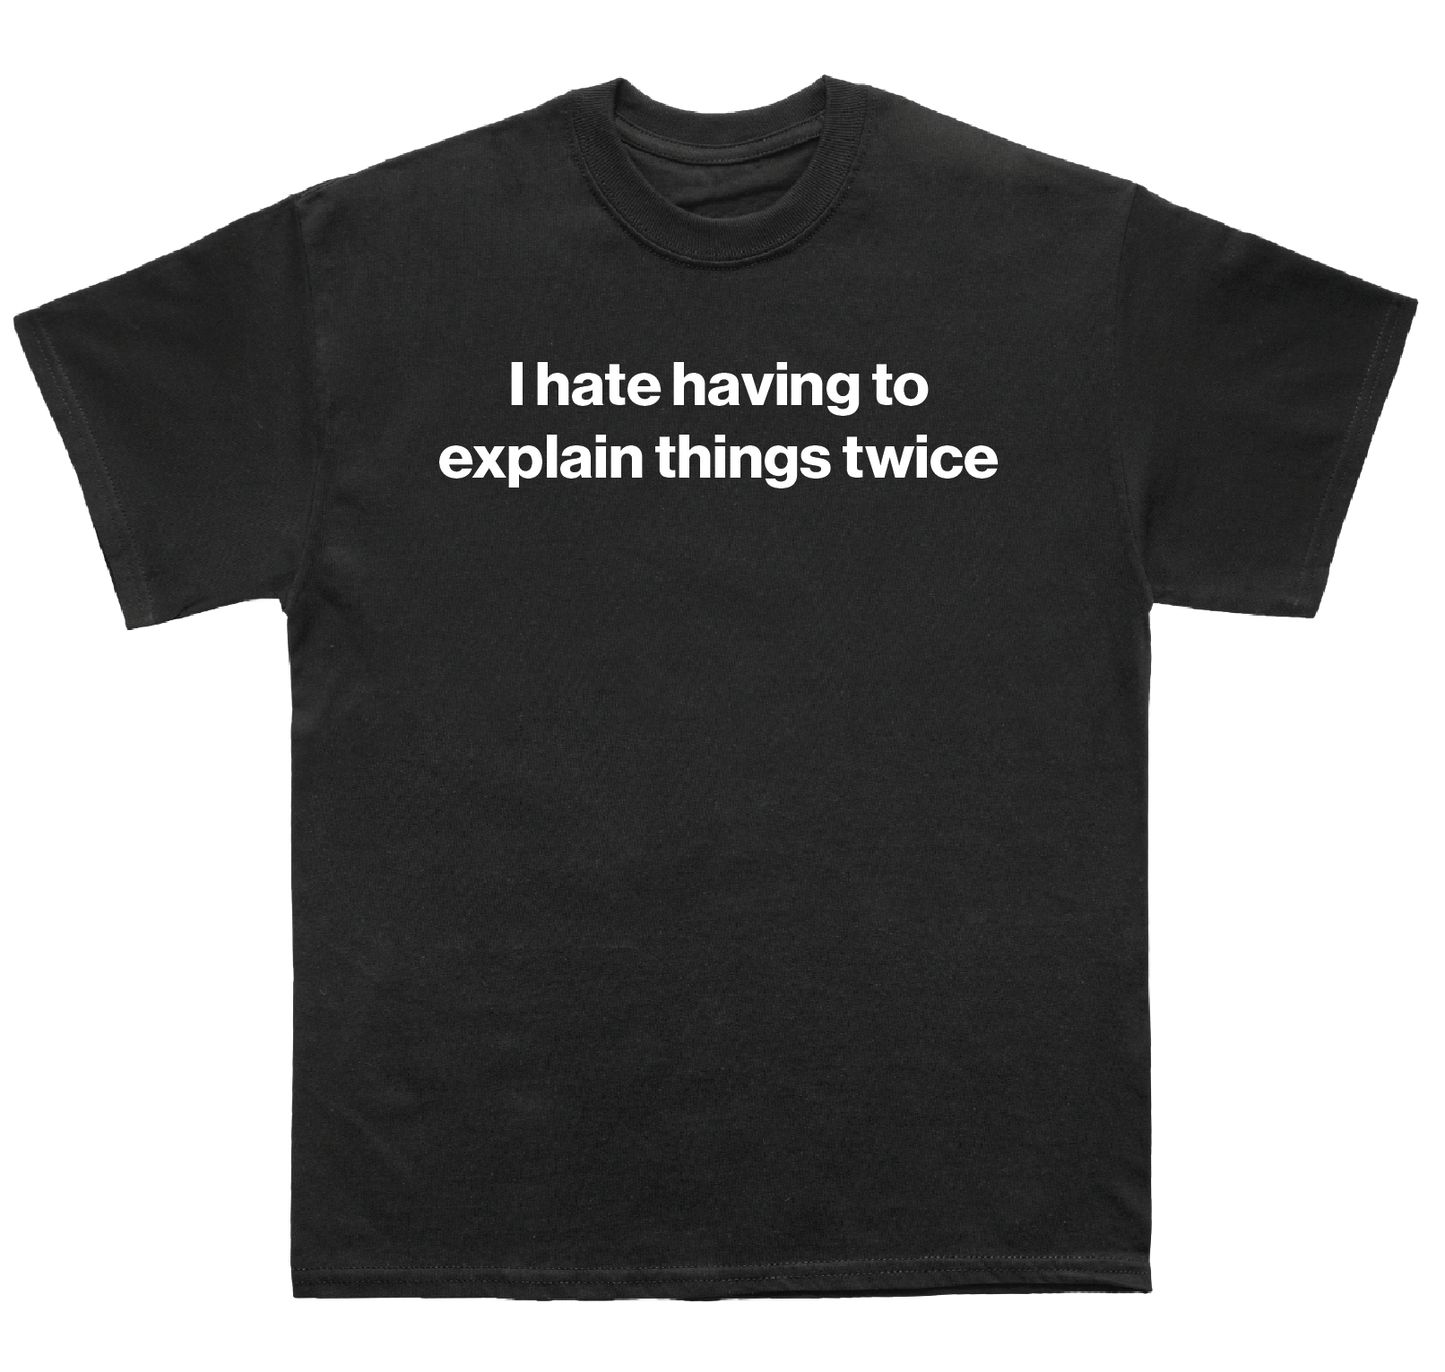 I hate having to explain things twice shirt